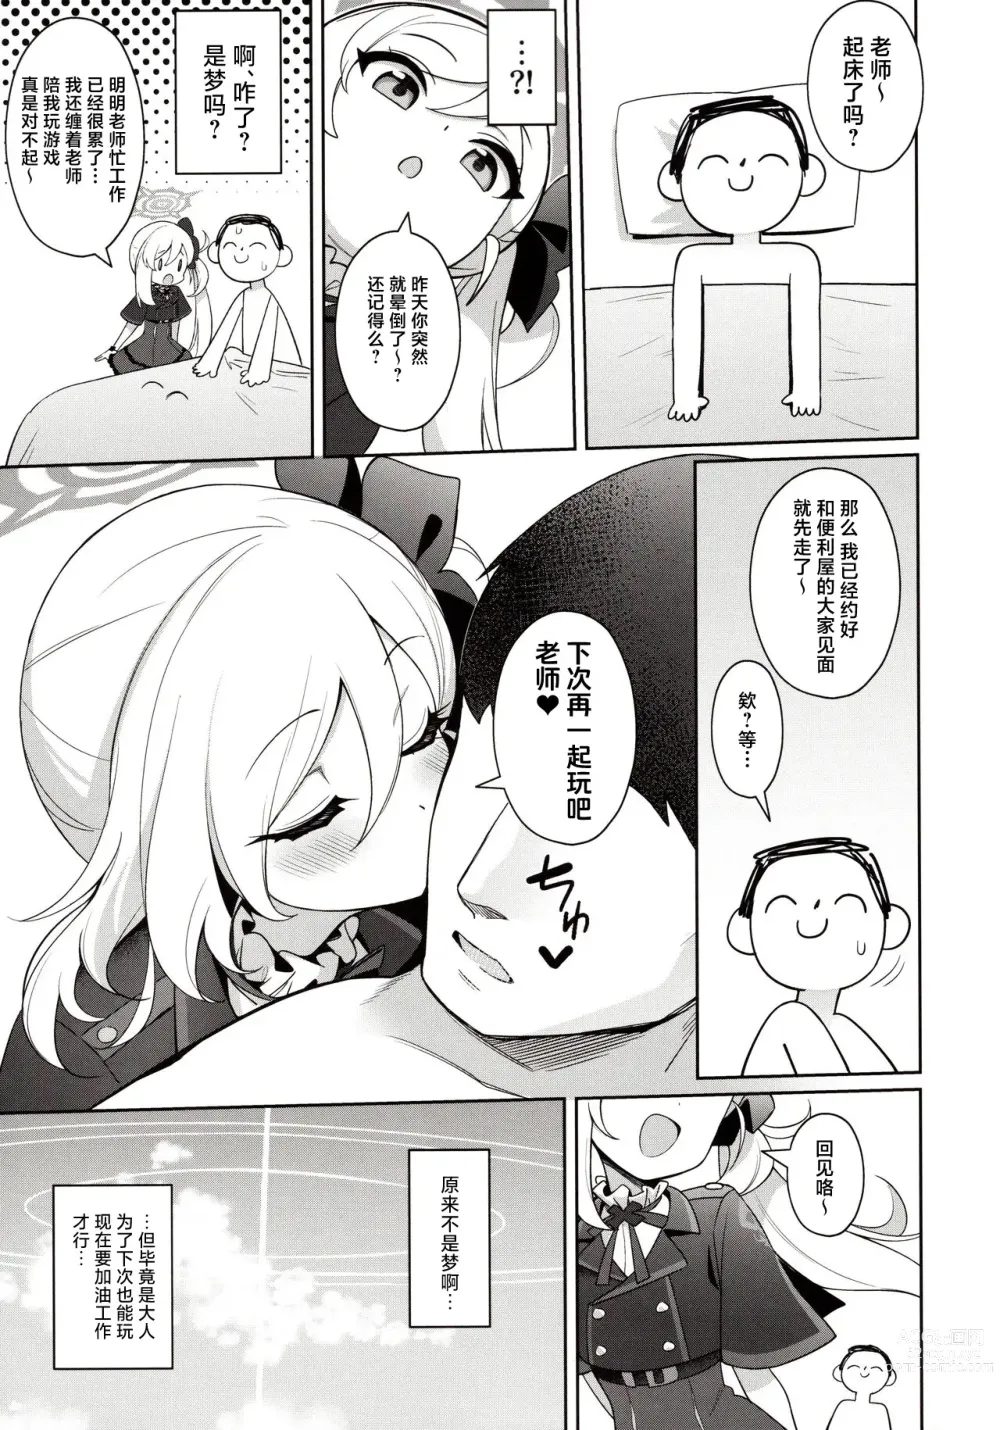 Page 23 of doujinshi 睦月想和大人一起玩